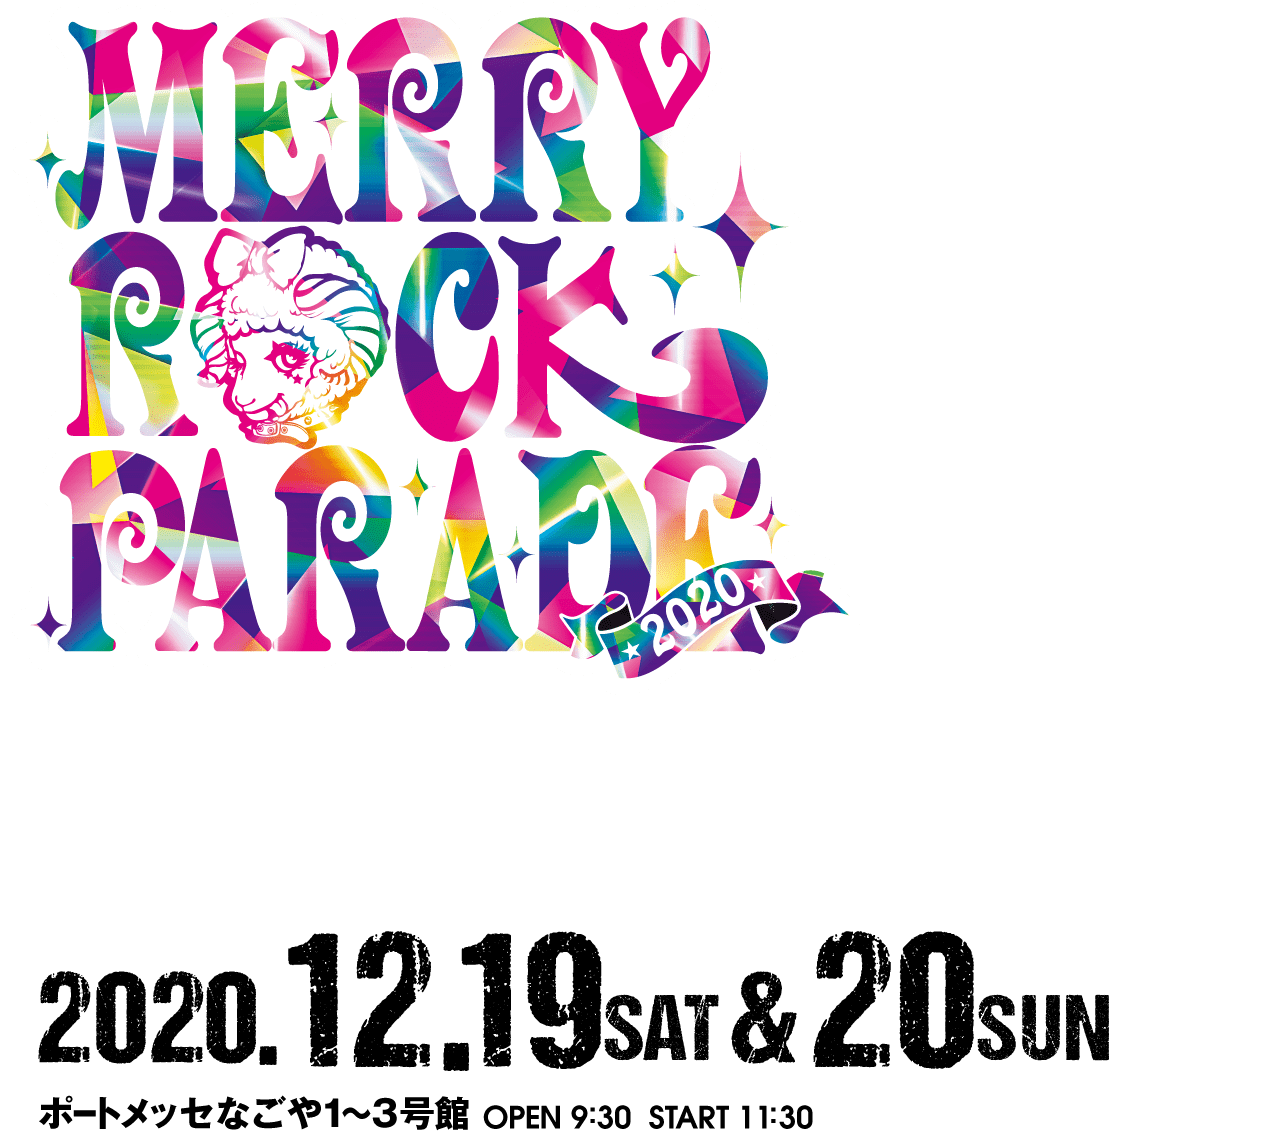 MERRY ROCK PARADE 2020